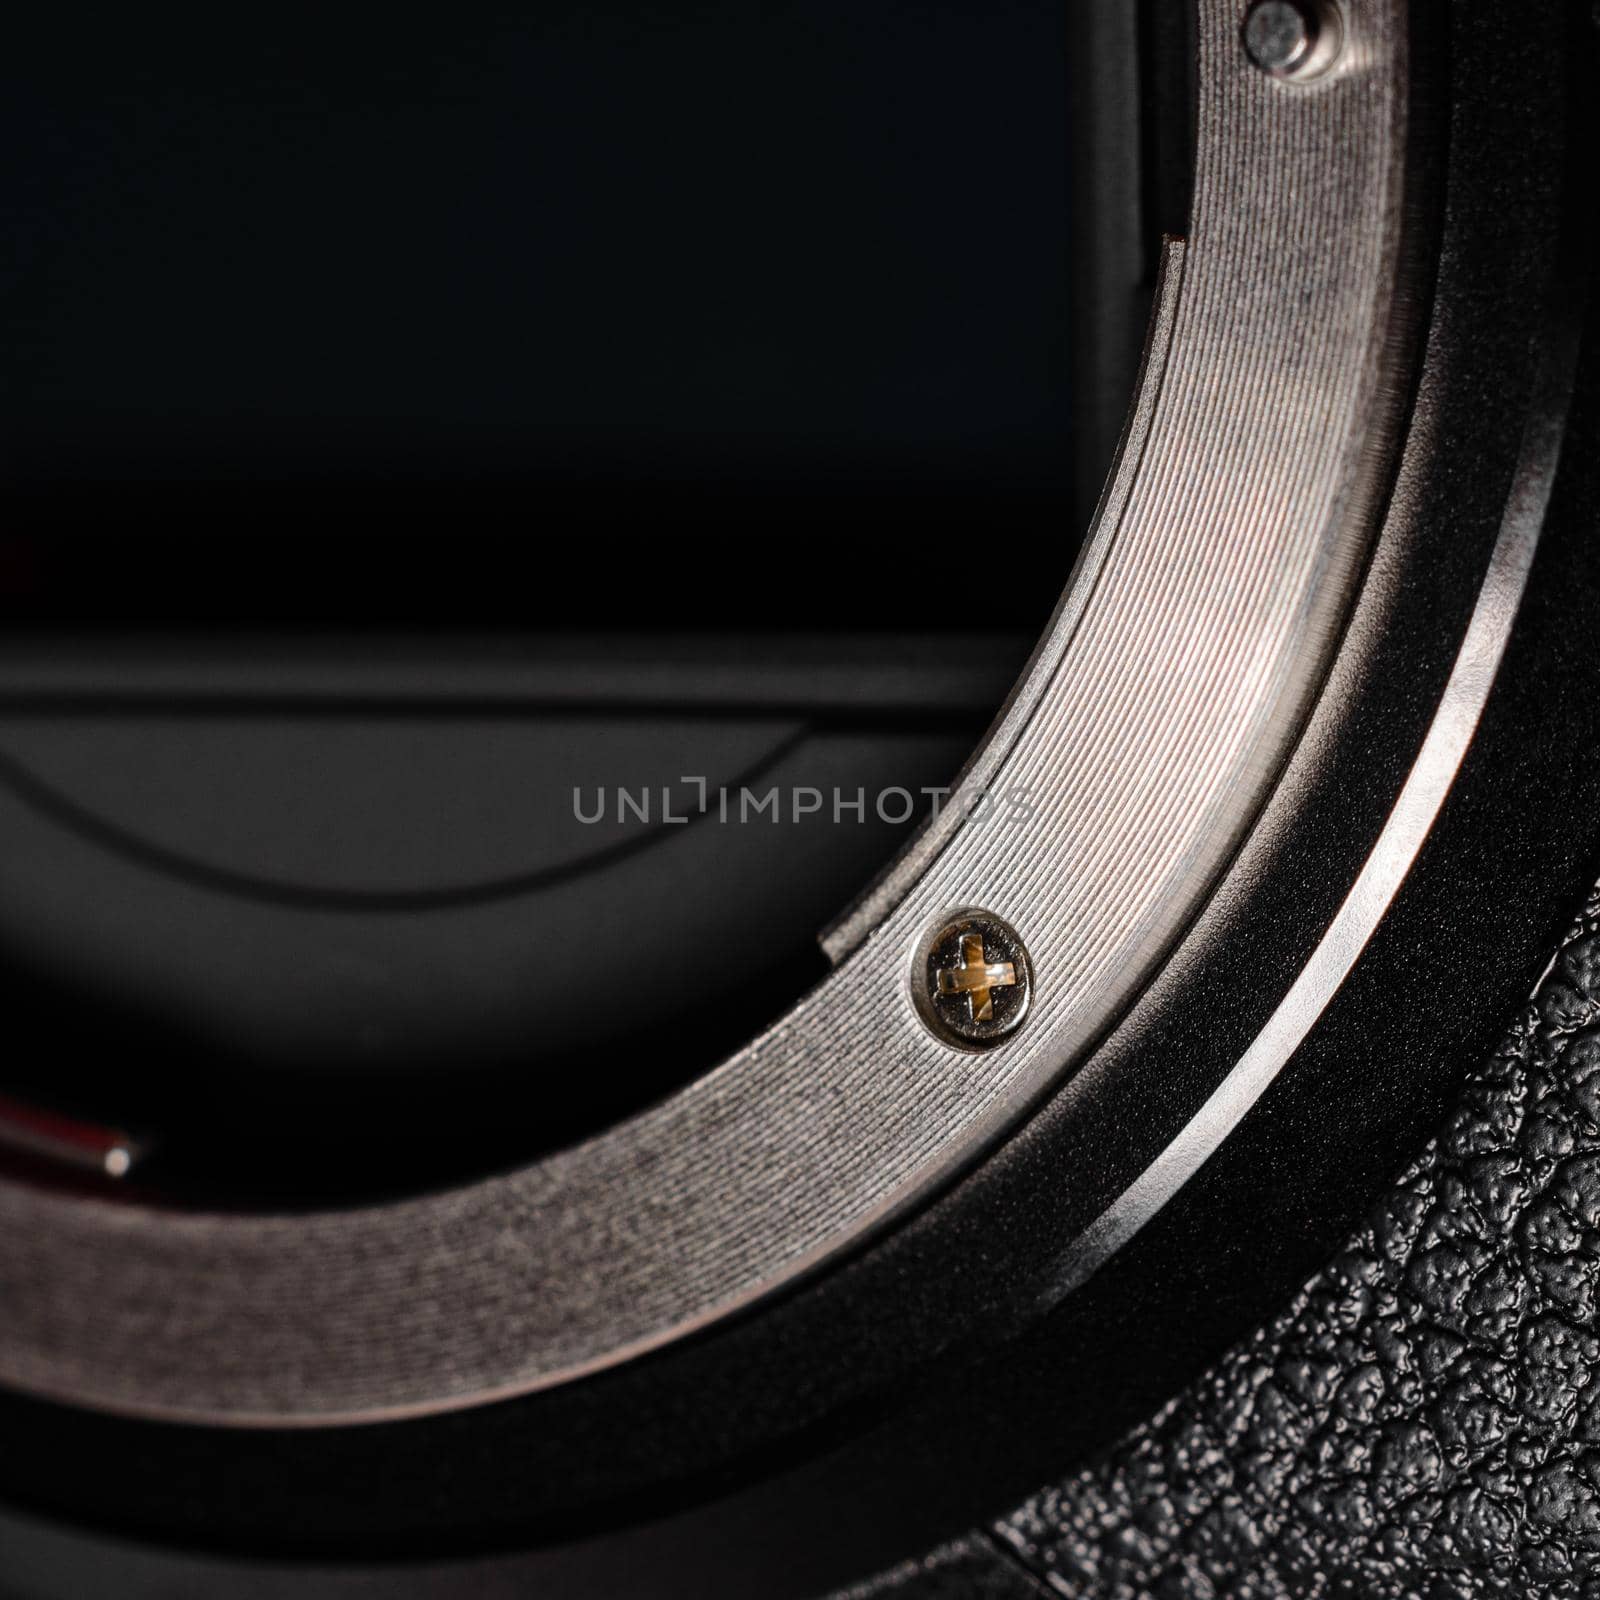 Camera close up, closeup bayonet, new series of cameras. by Niko_Cingaryuk